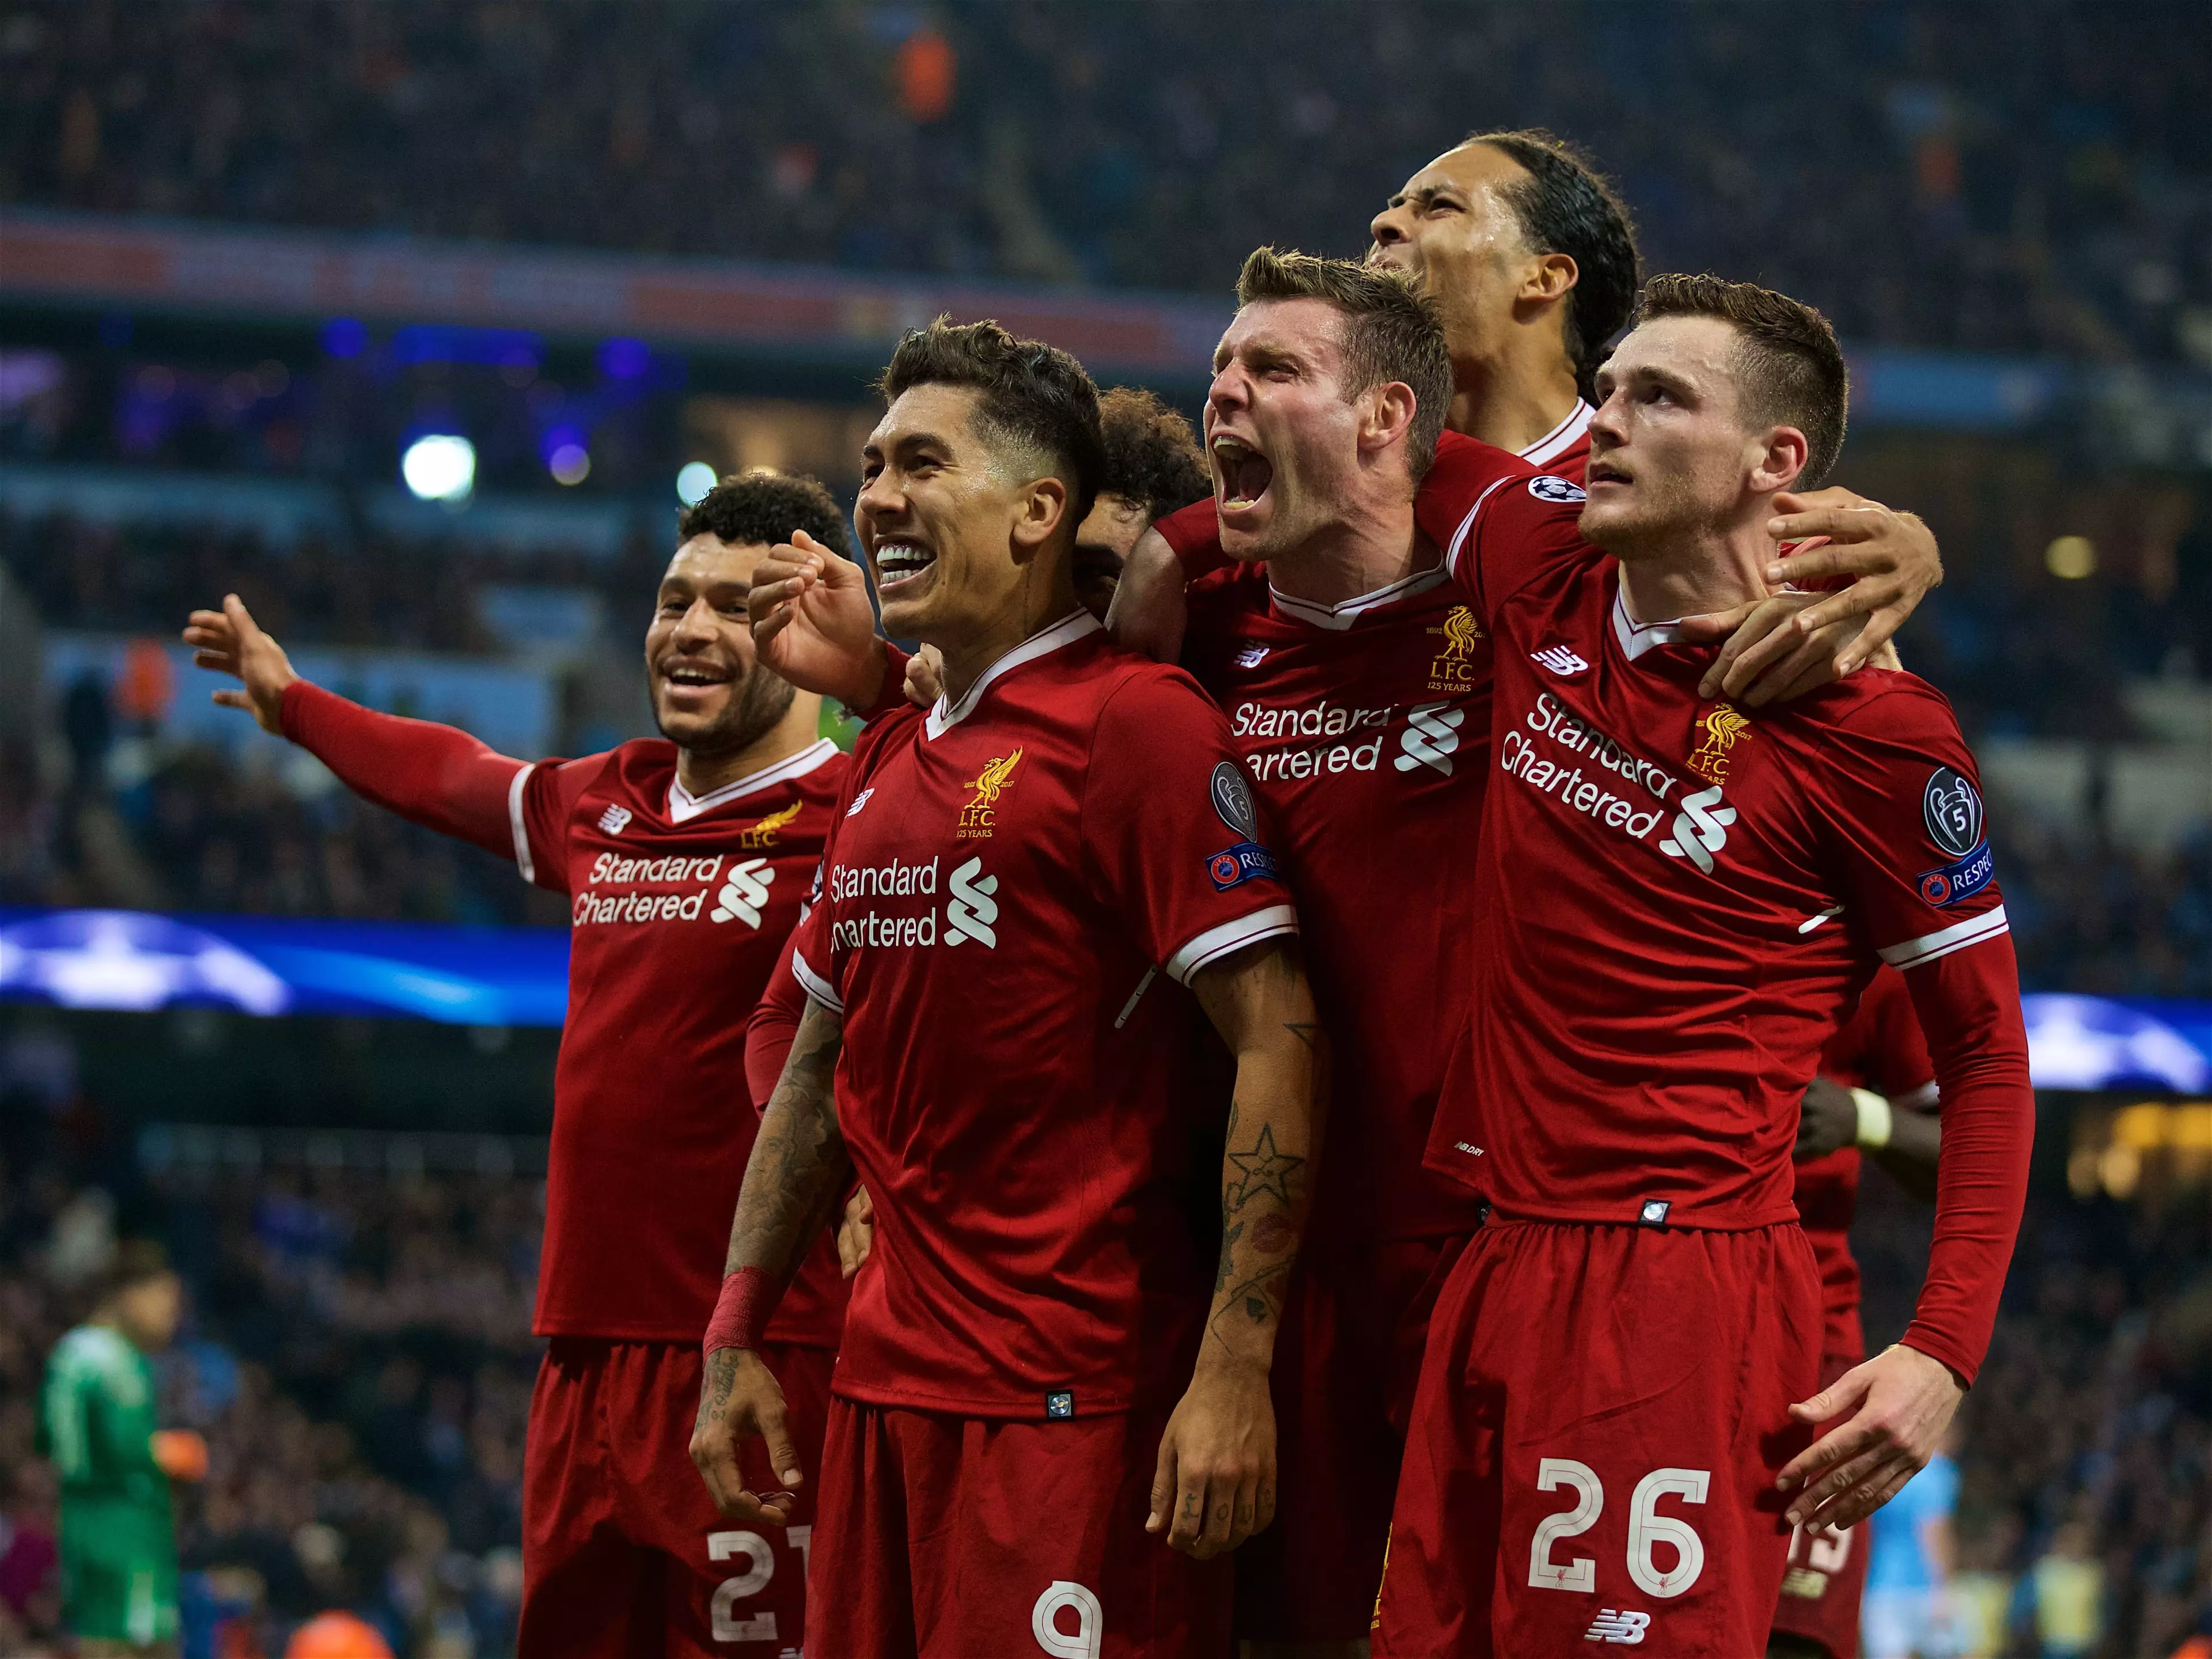 Liverpool players celebrate scoring a goal. Image: PA